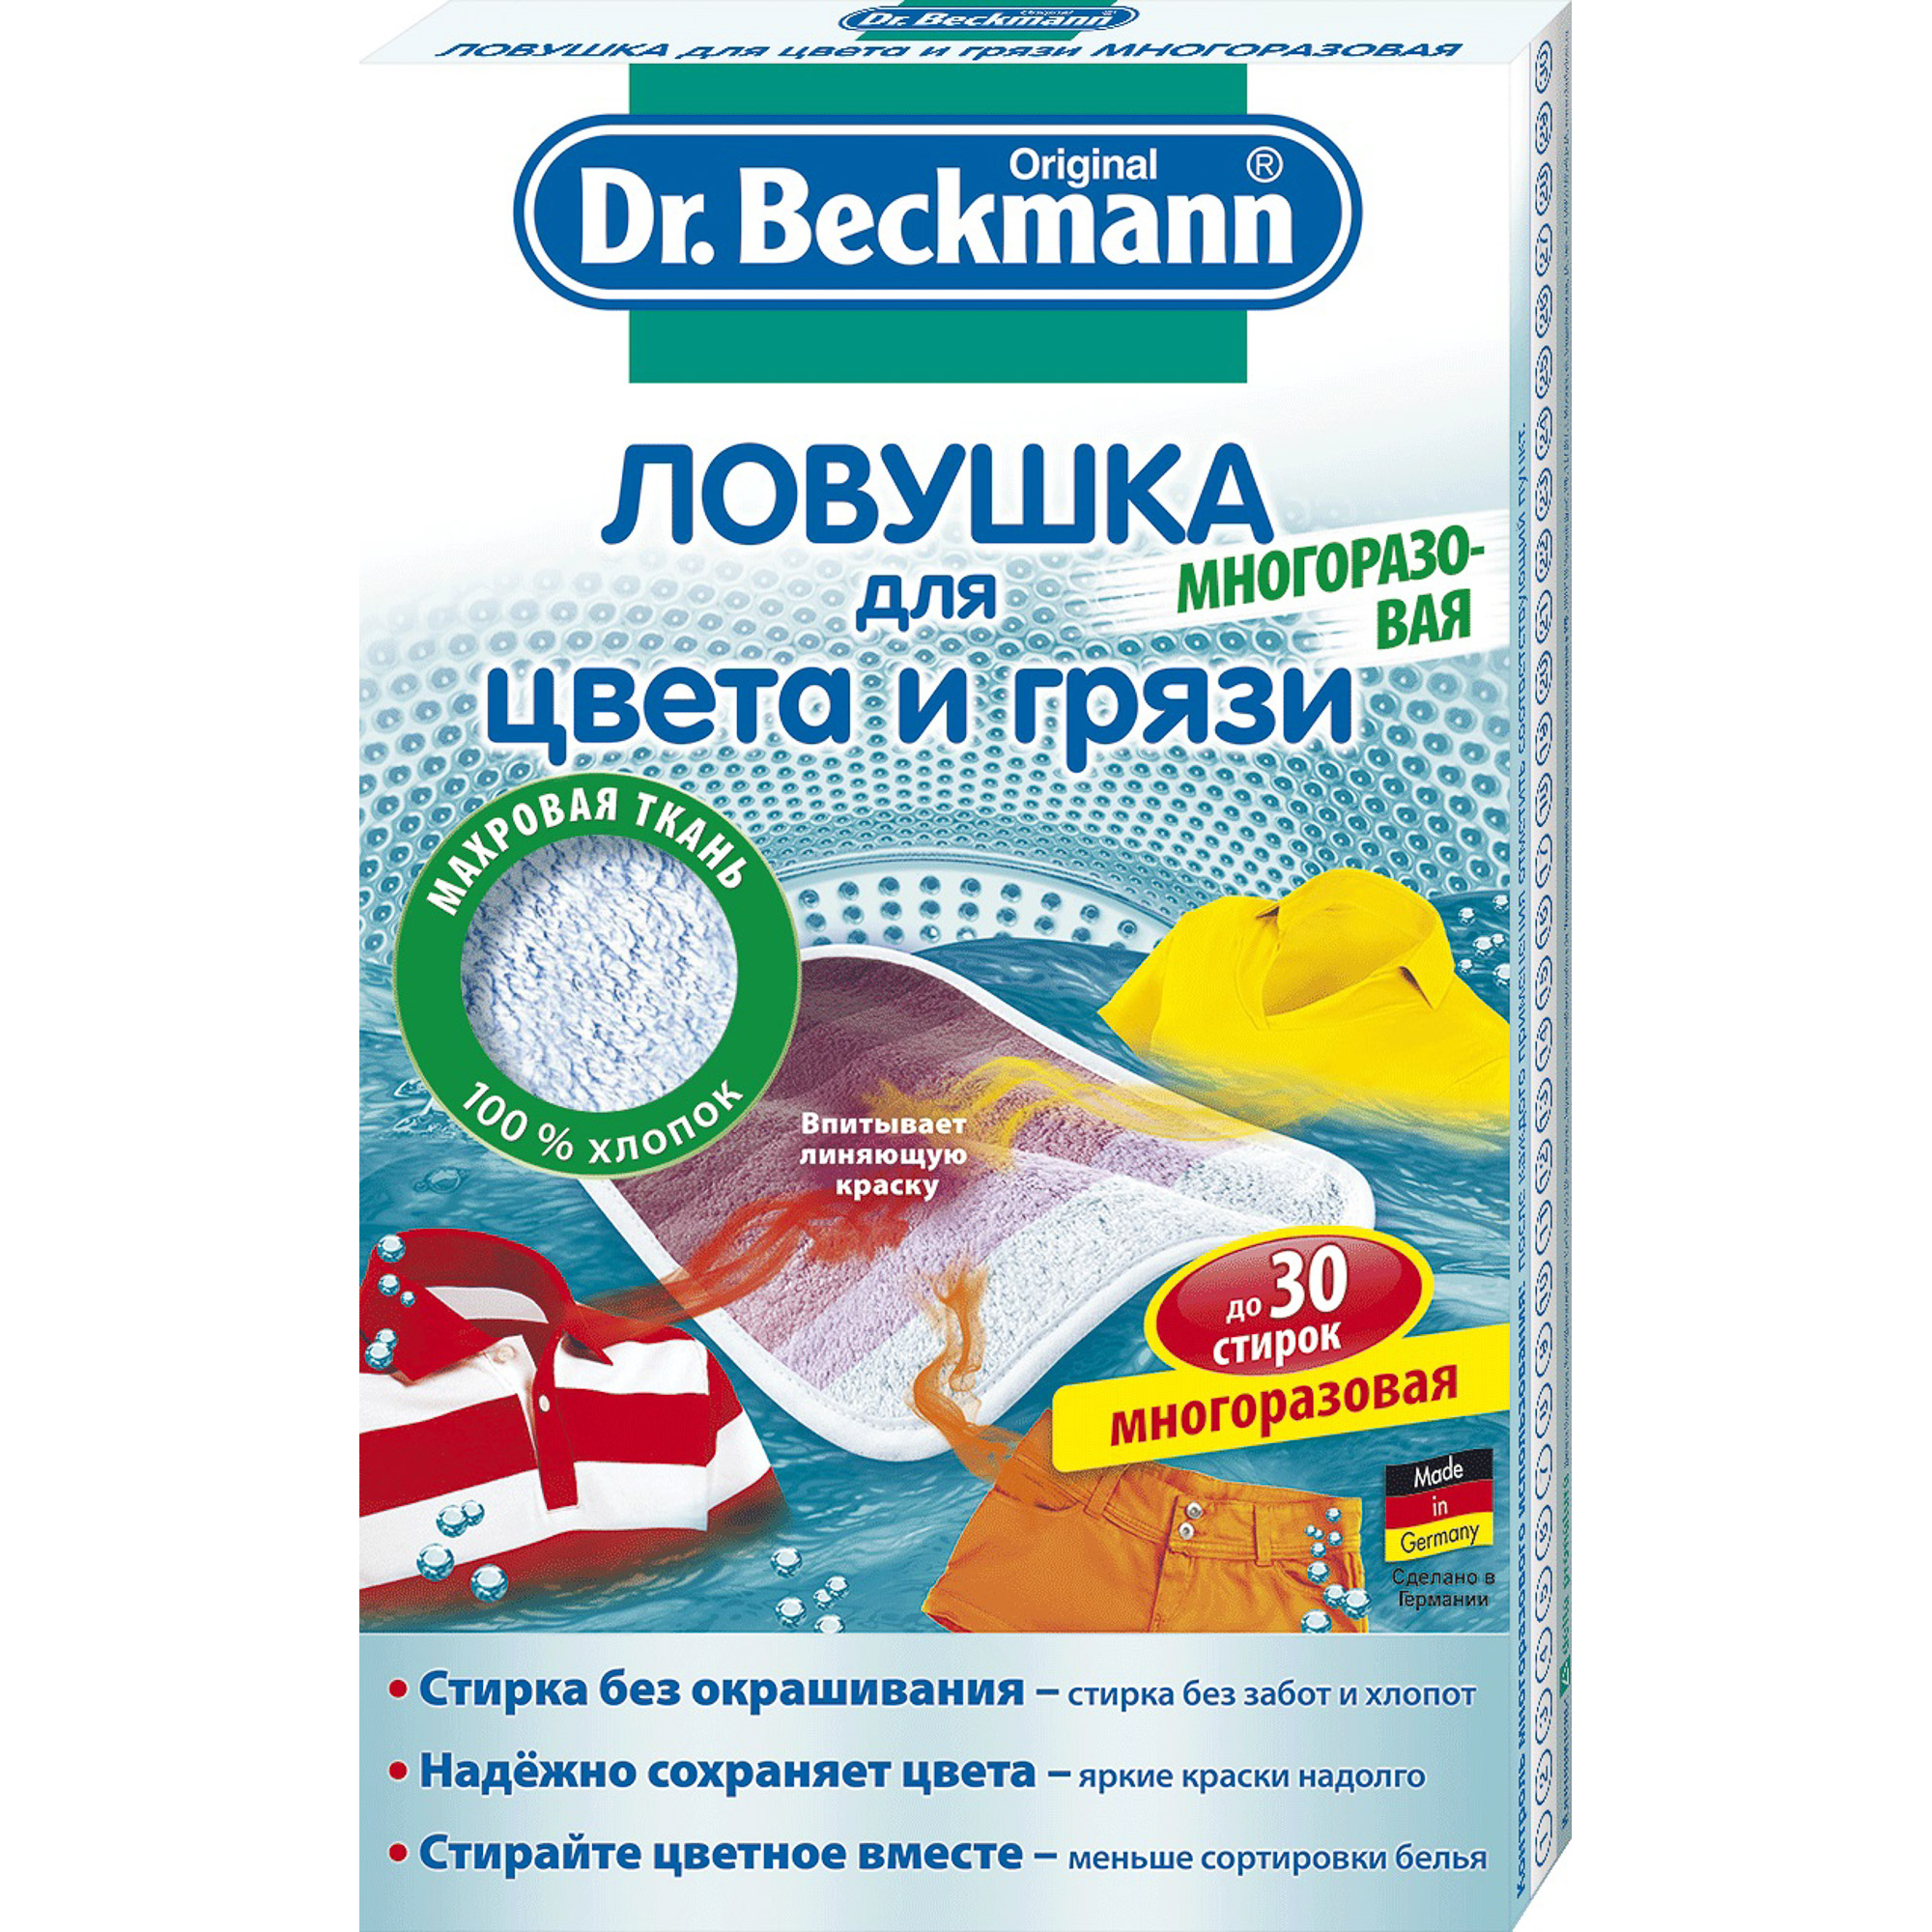 Ловушка для цвета и грязи Dr.Beckmann многоразовая - фото 1